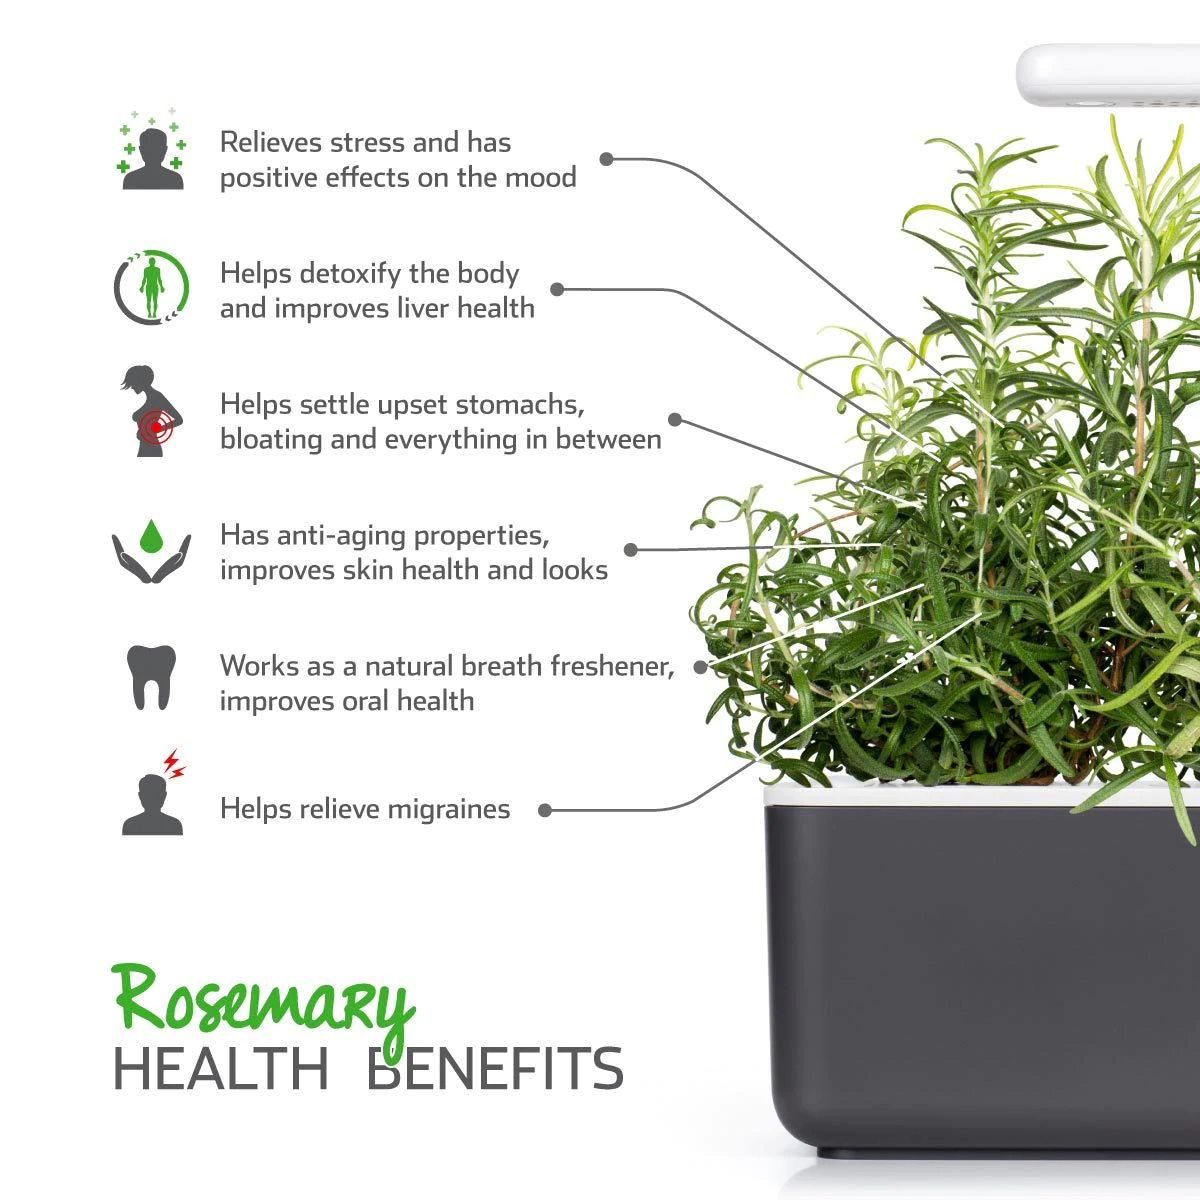 Click & Grow Rosemary plant pods